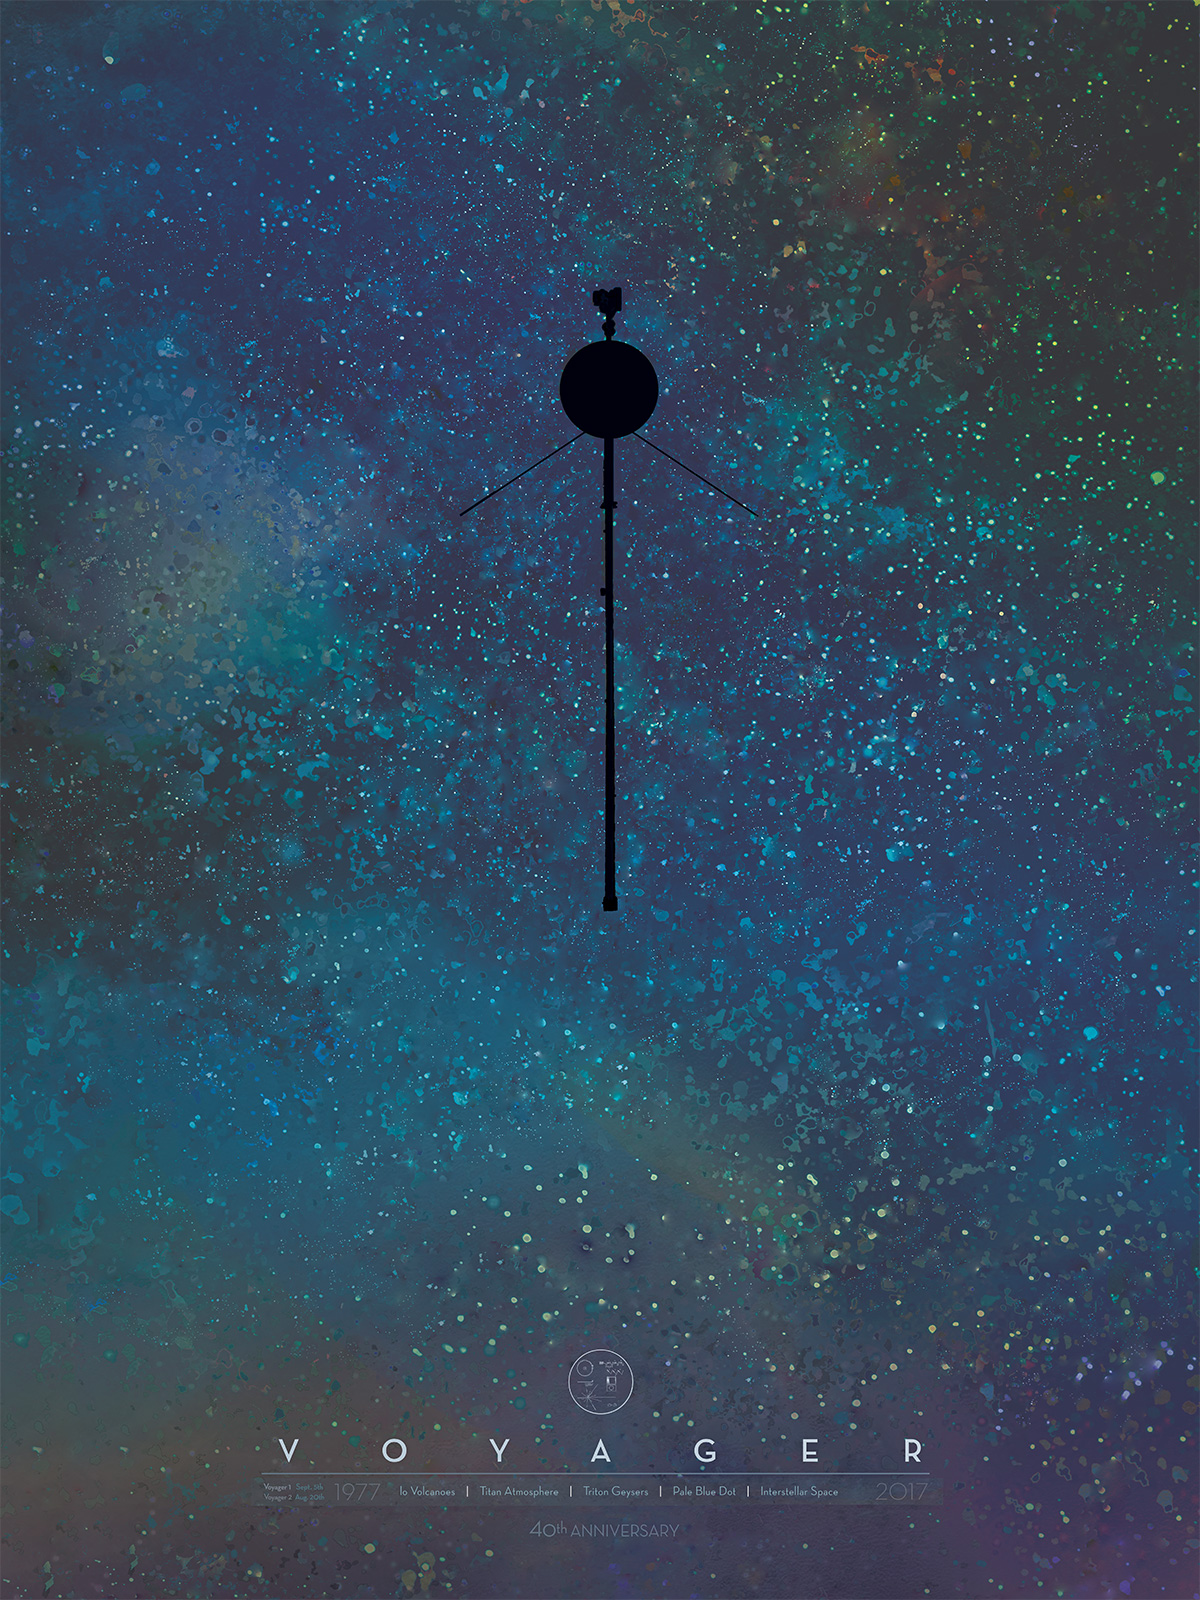 Voyager 1 Milky Way - HD Wallpaper 